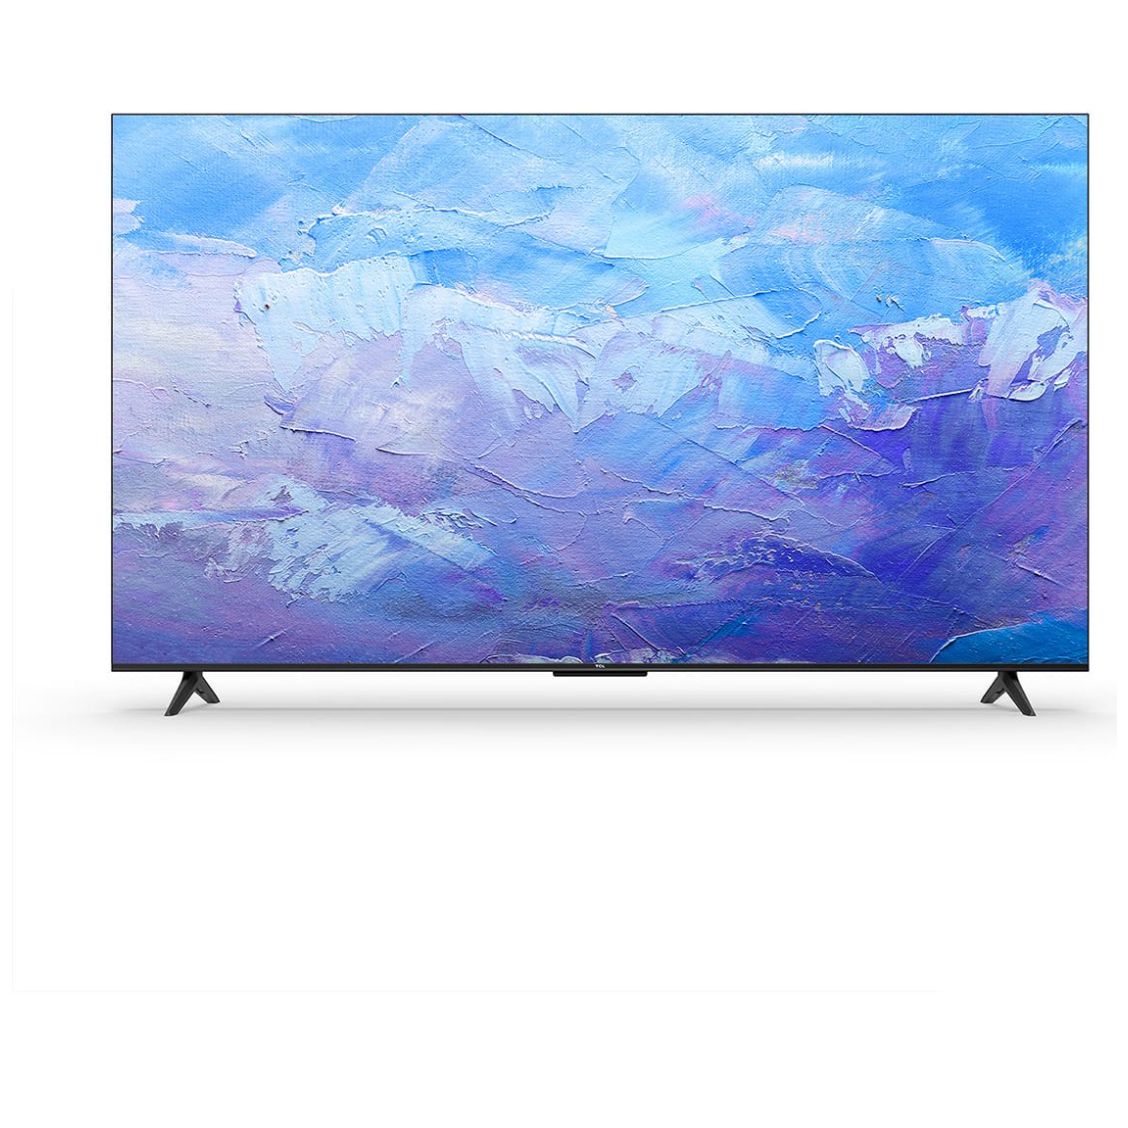 Pantalla TCL 65 4K Smart TV LED 65S443-MX Roku TV – Mi tienda